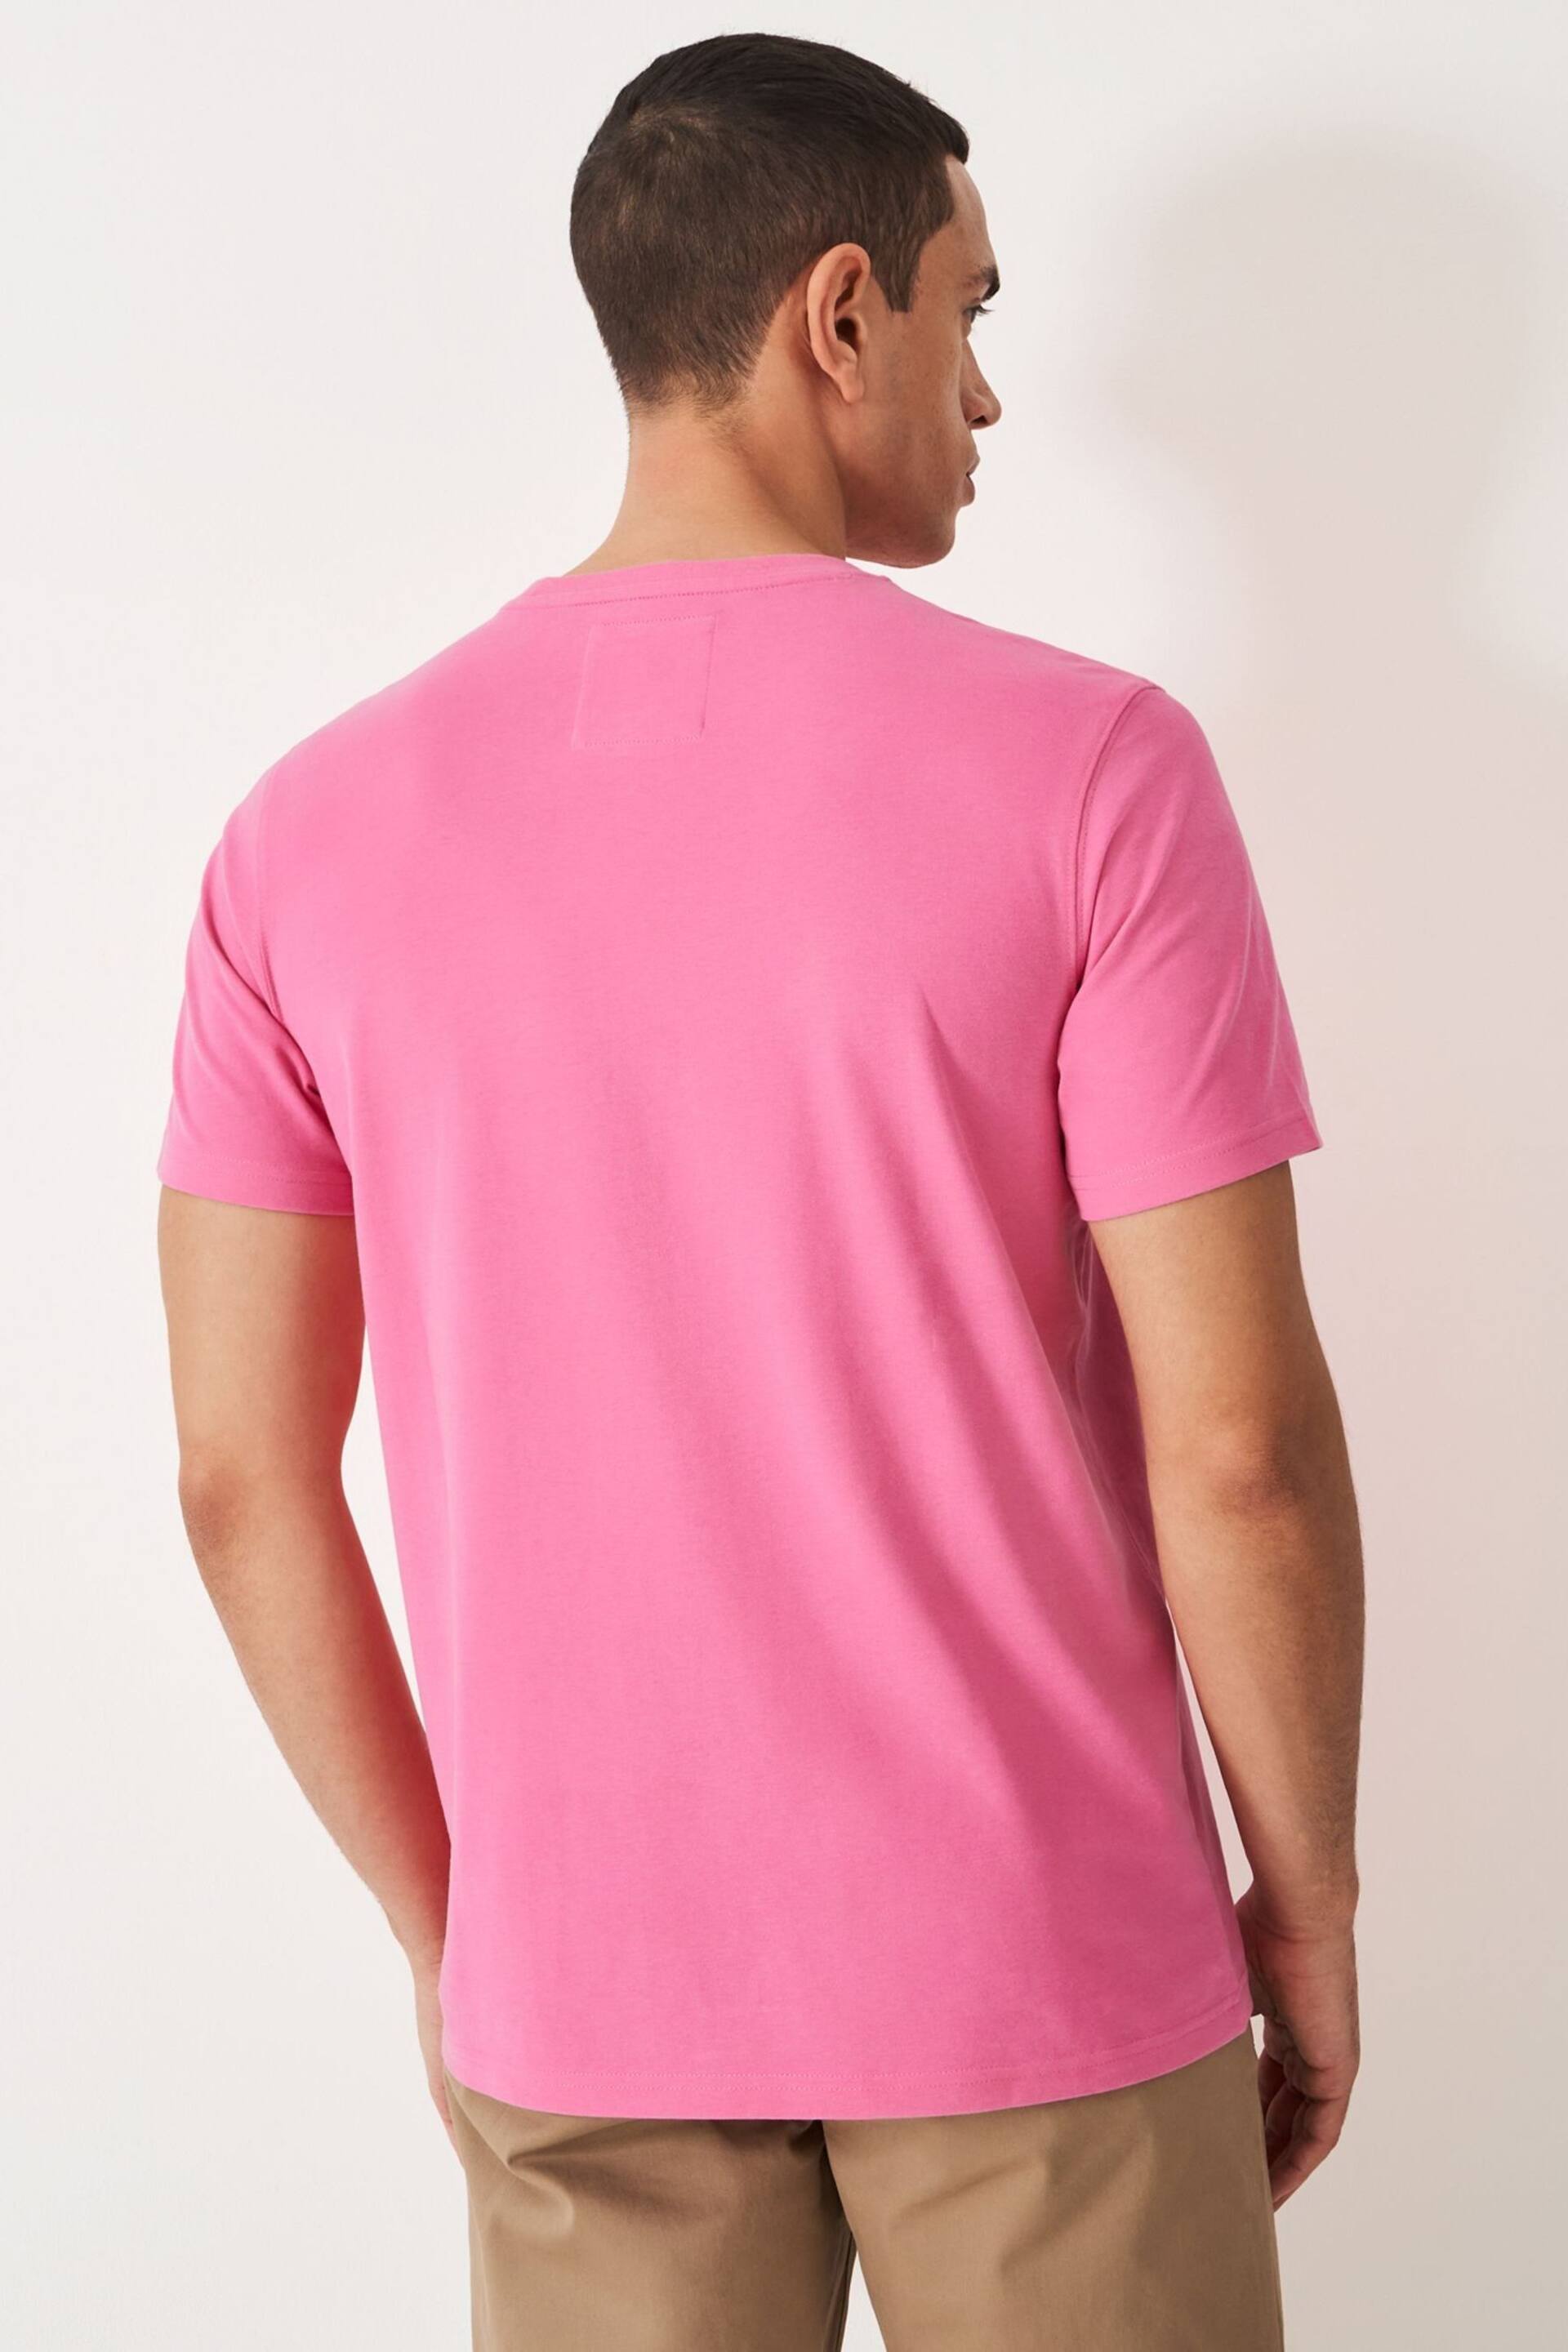 Crew Clothing Plain Cotton Classic T-Shirt - Image 3 of 5